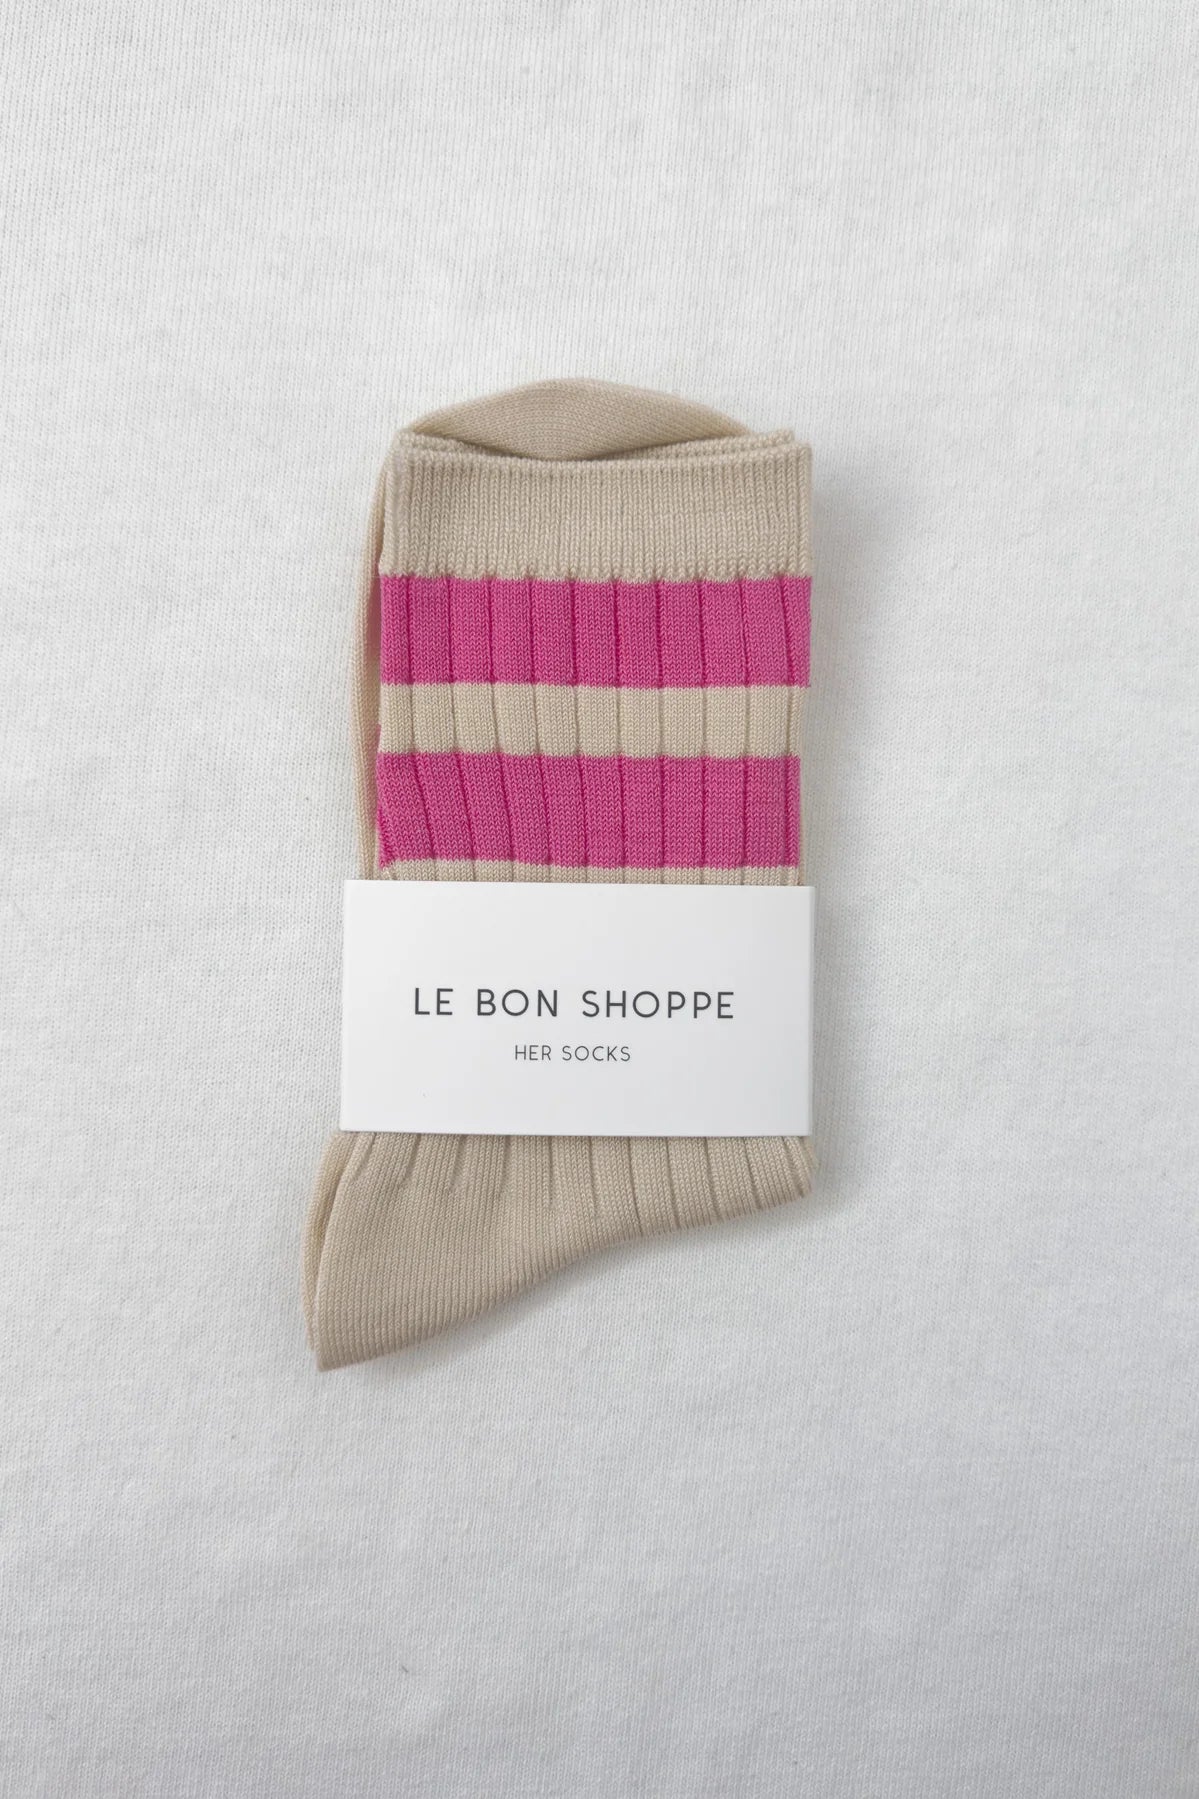 Le Bon Shoppe her varsity socks cream Taffy pink stripes PIPE AND ROW